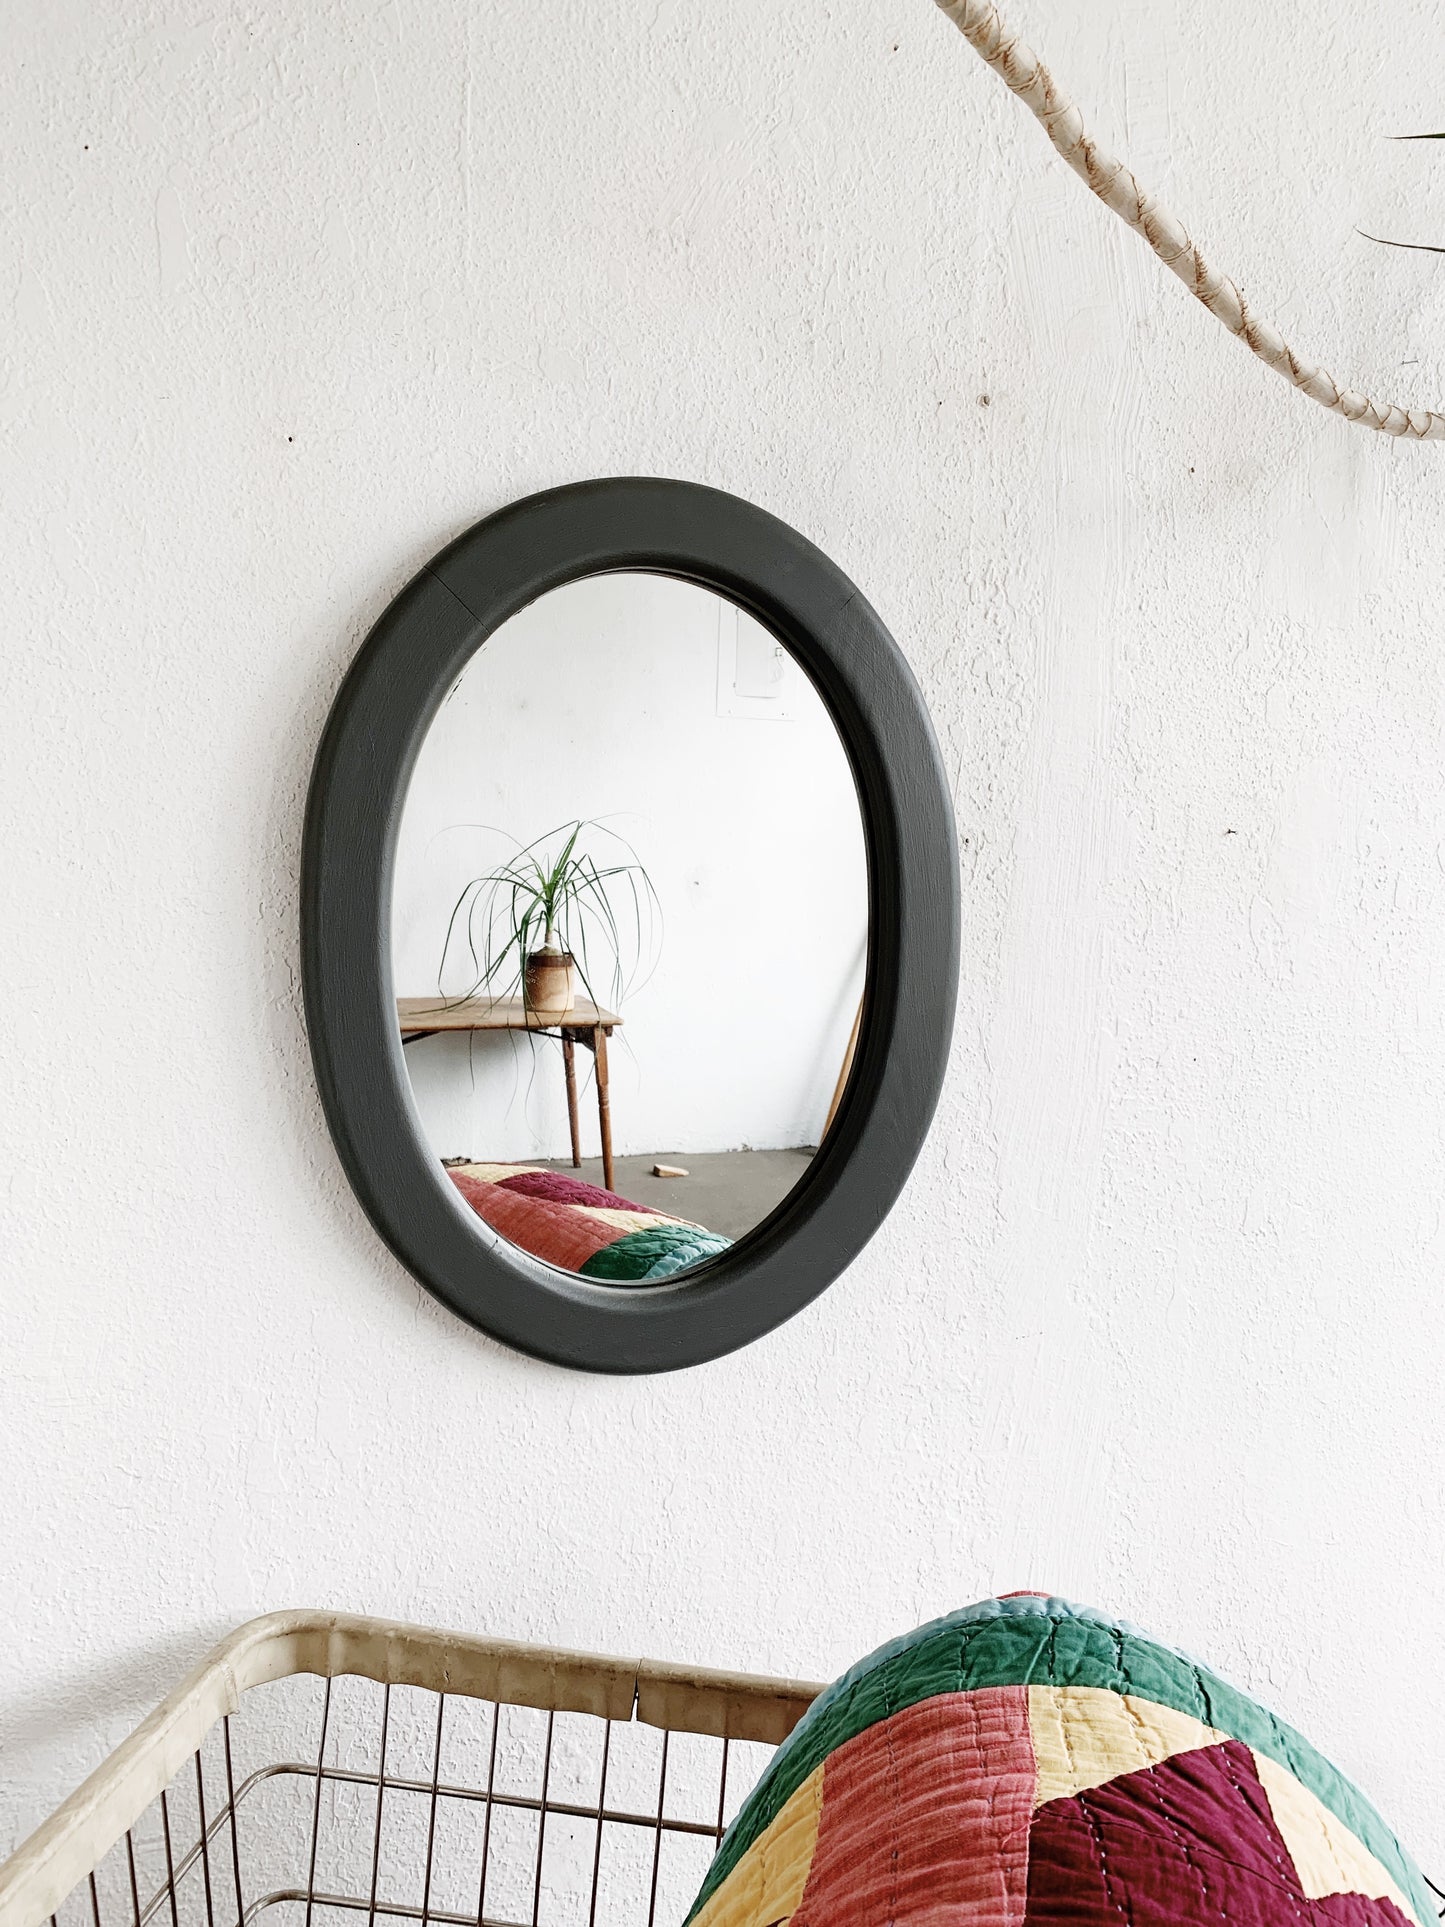 Vintage Oval Painted Wood Framed Mirror